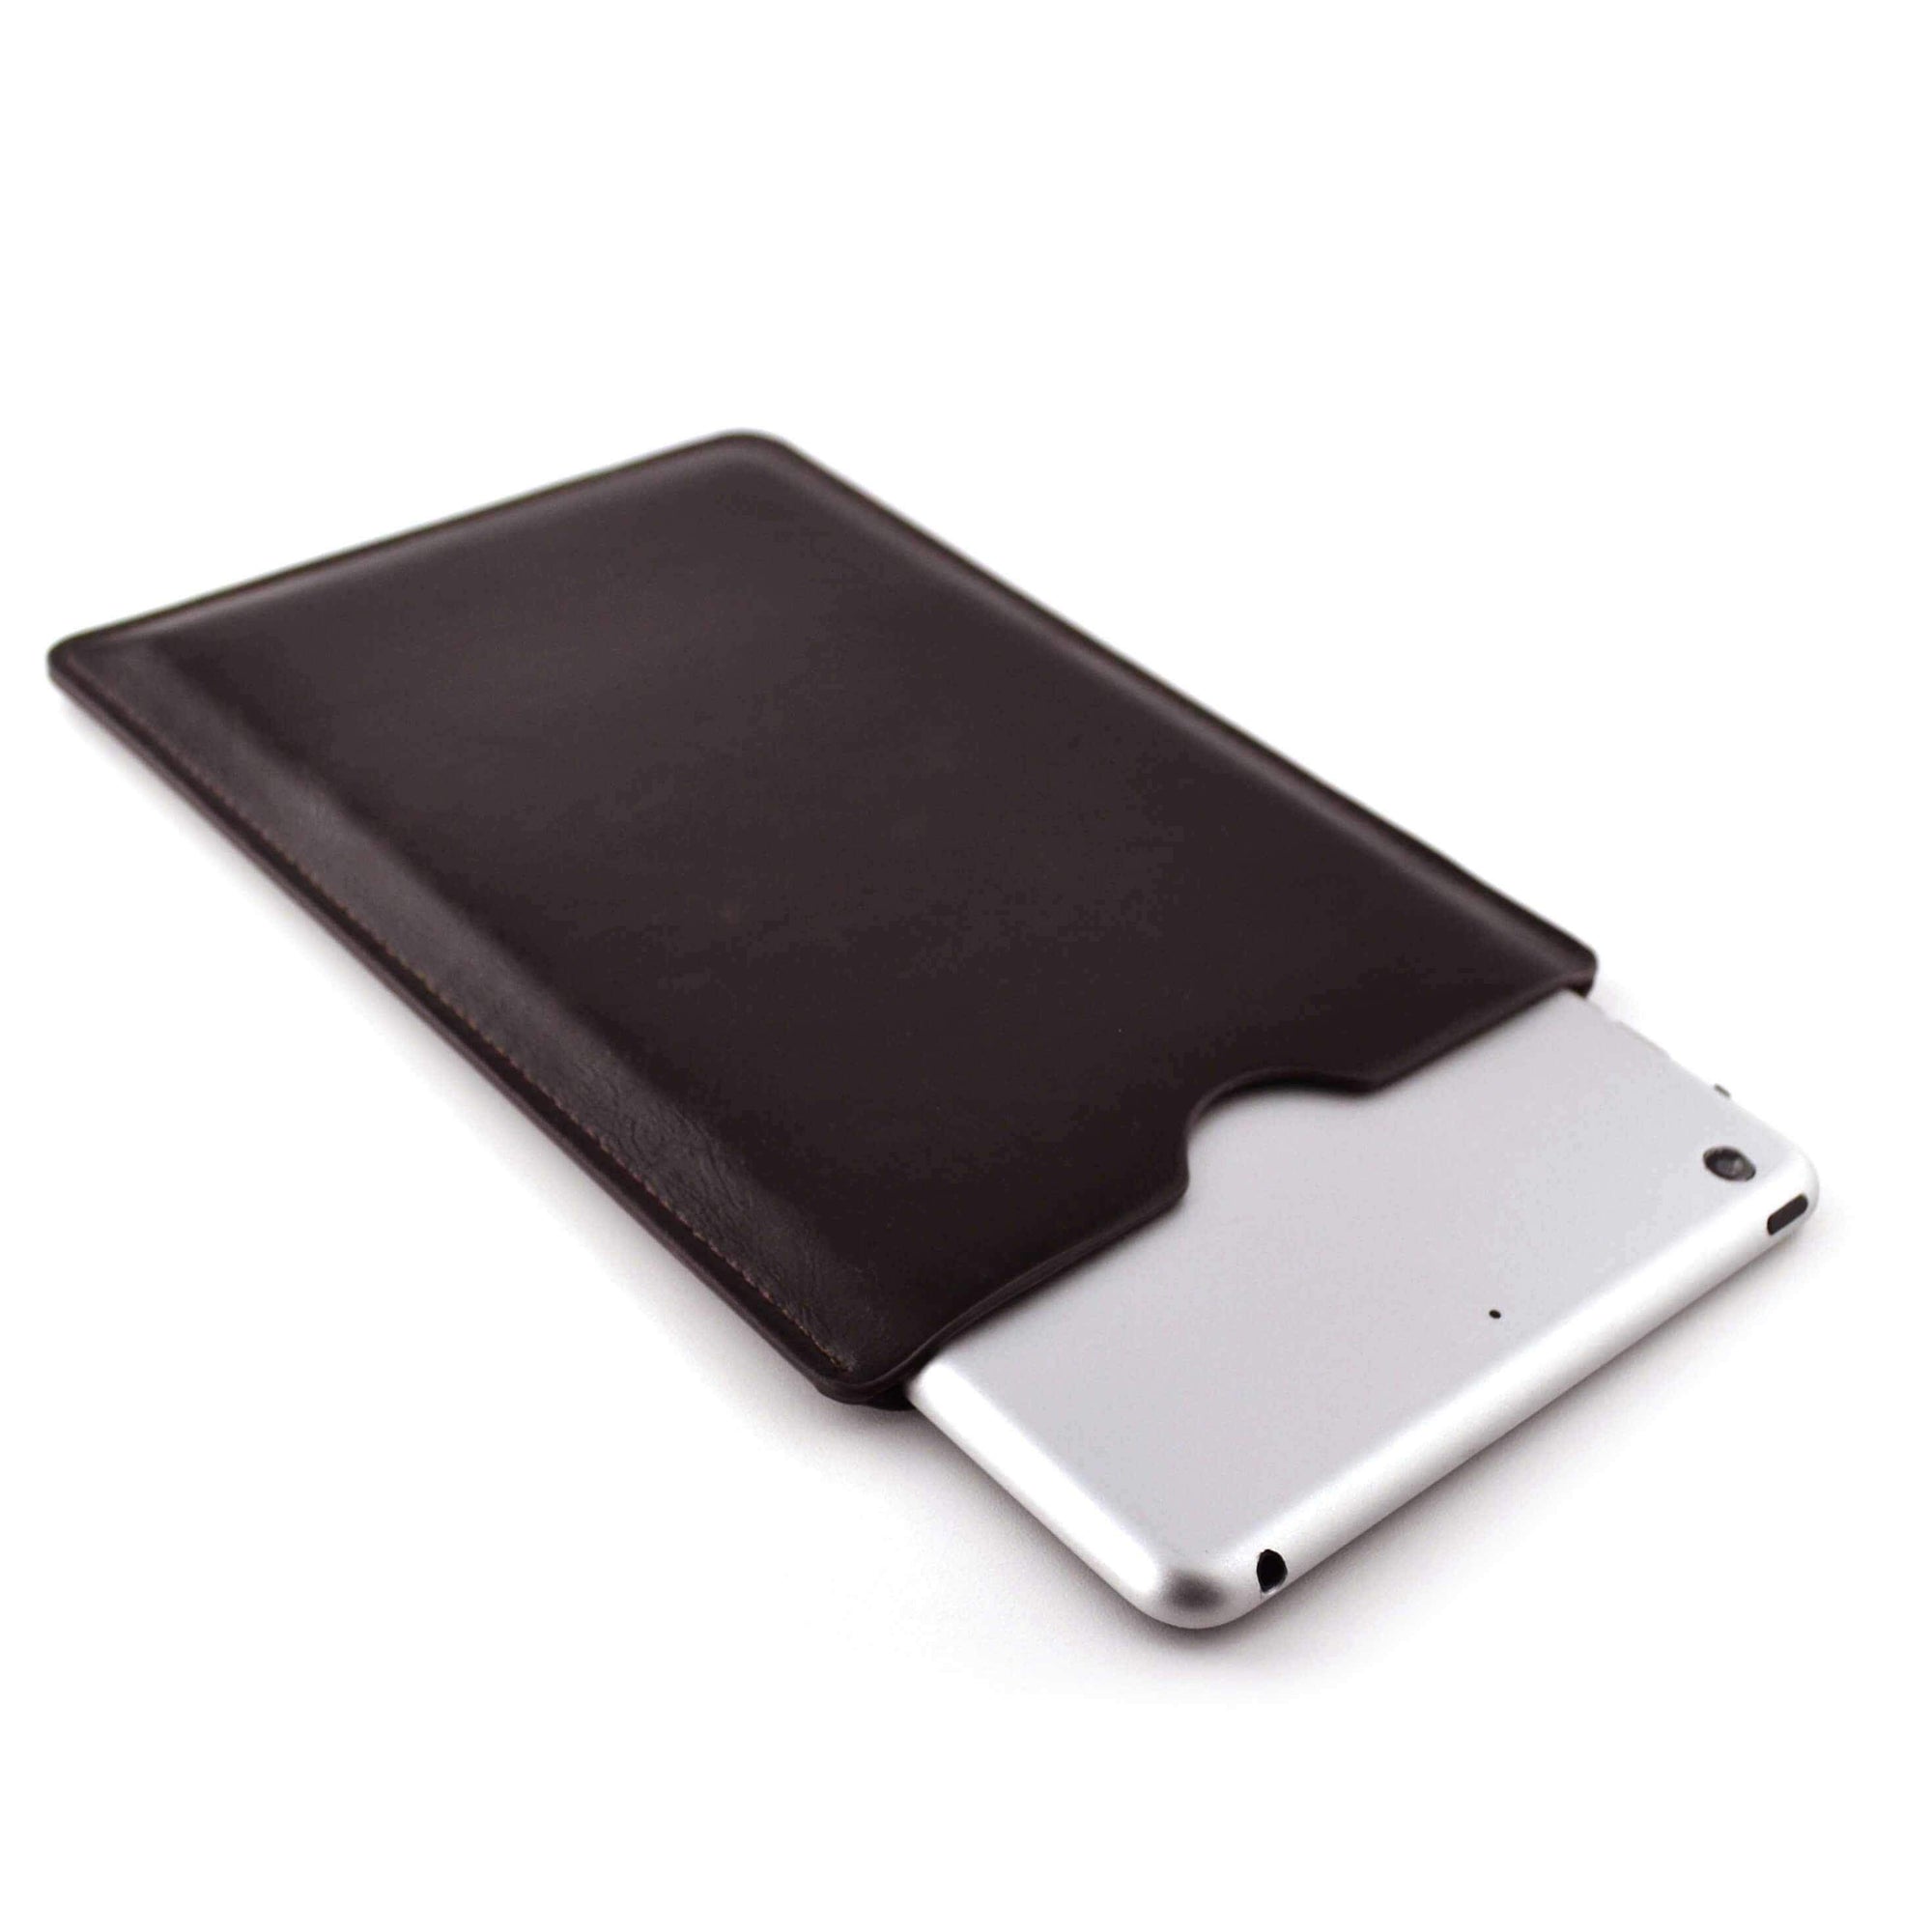 Executive Sleeve - Premium Synthetic Leather with Microfiber Lining - iPads iPad Sleeve Dockem 